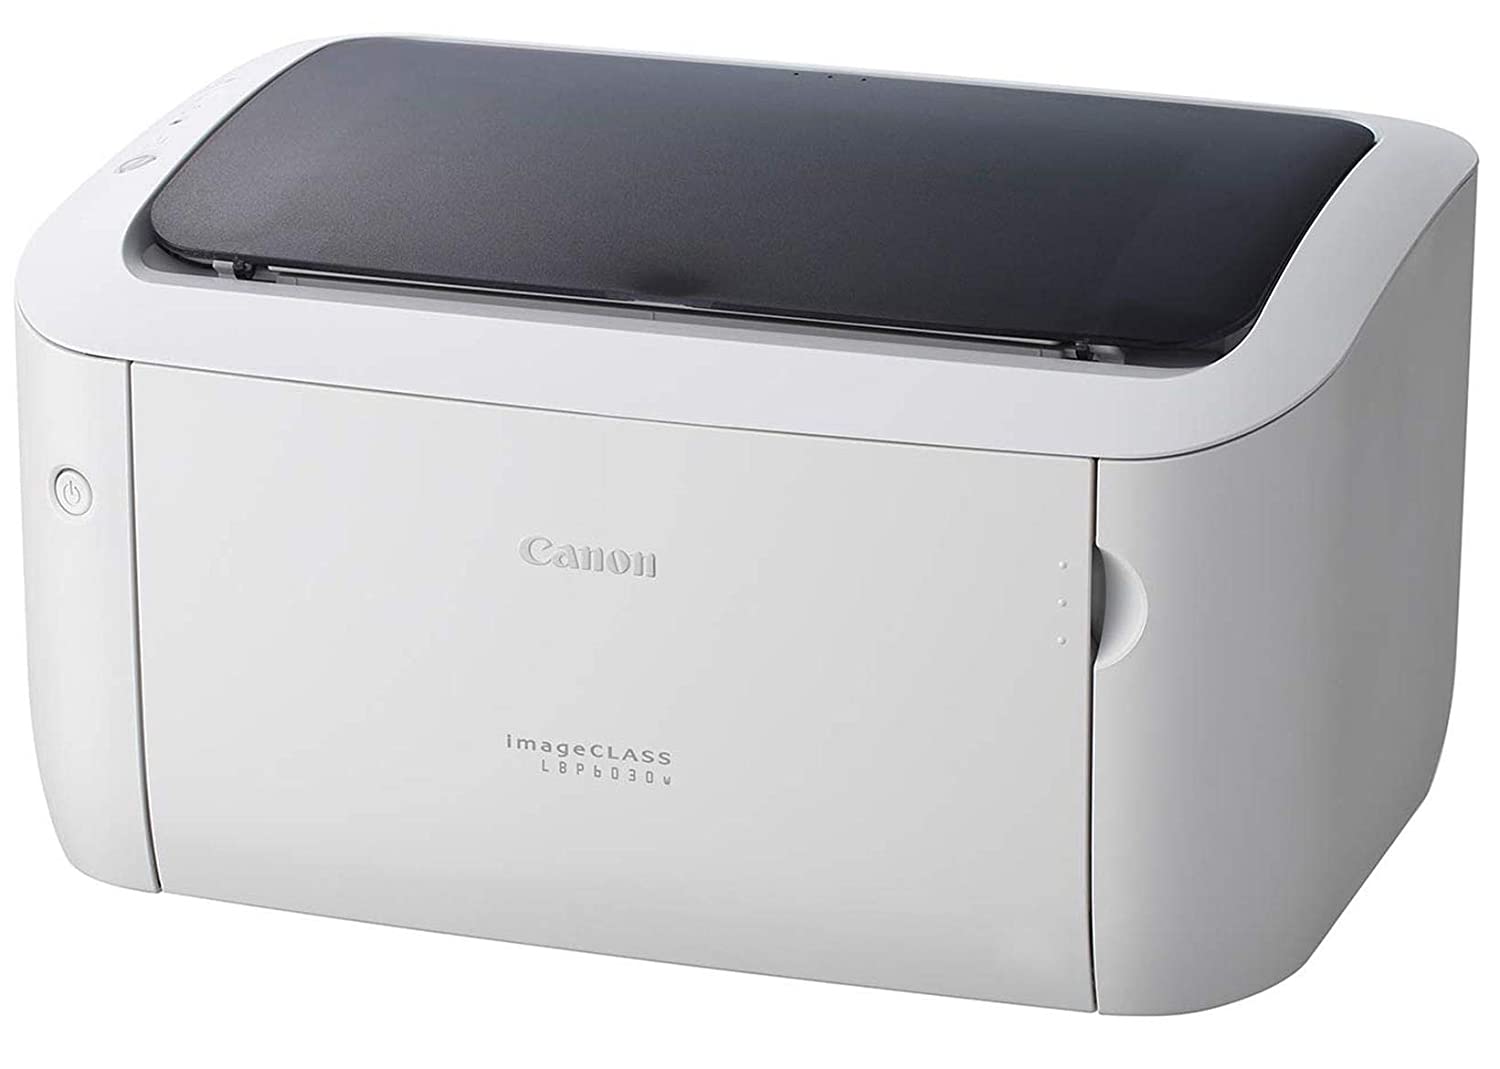 buy Canon LBP6030W Image Class Laser Printer